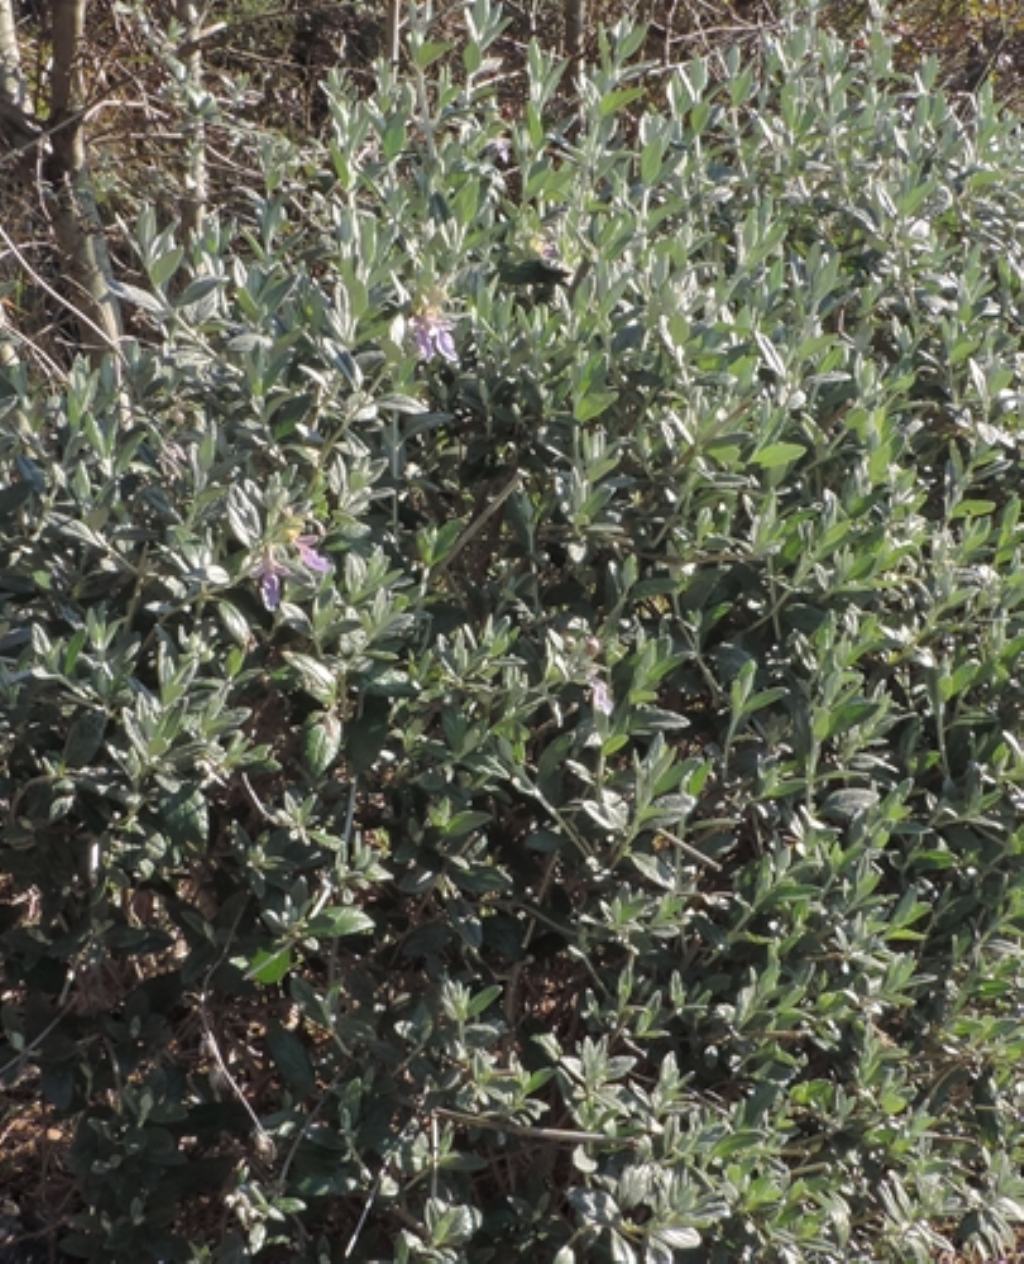 Cespuglio verde e compatto:  Teucrium fruticans (Lamiaceae)